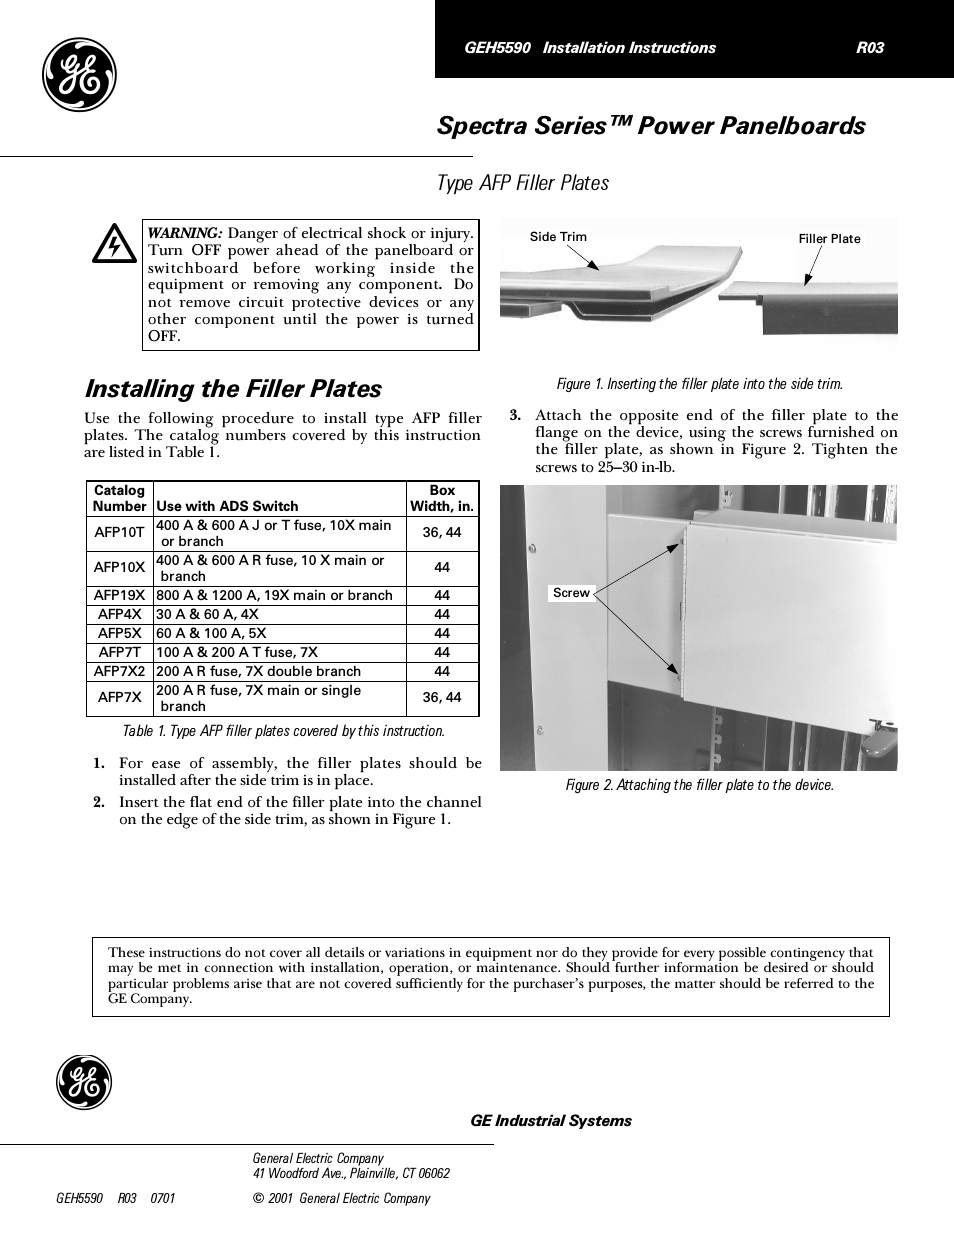 Spectra Series Power Panelboards AFP Filler Plates